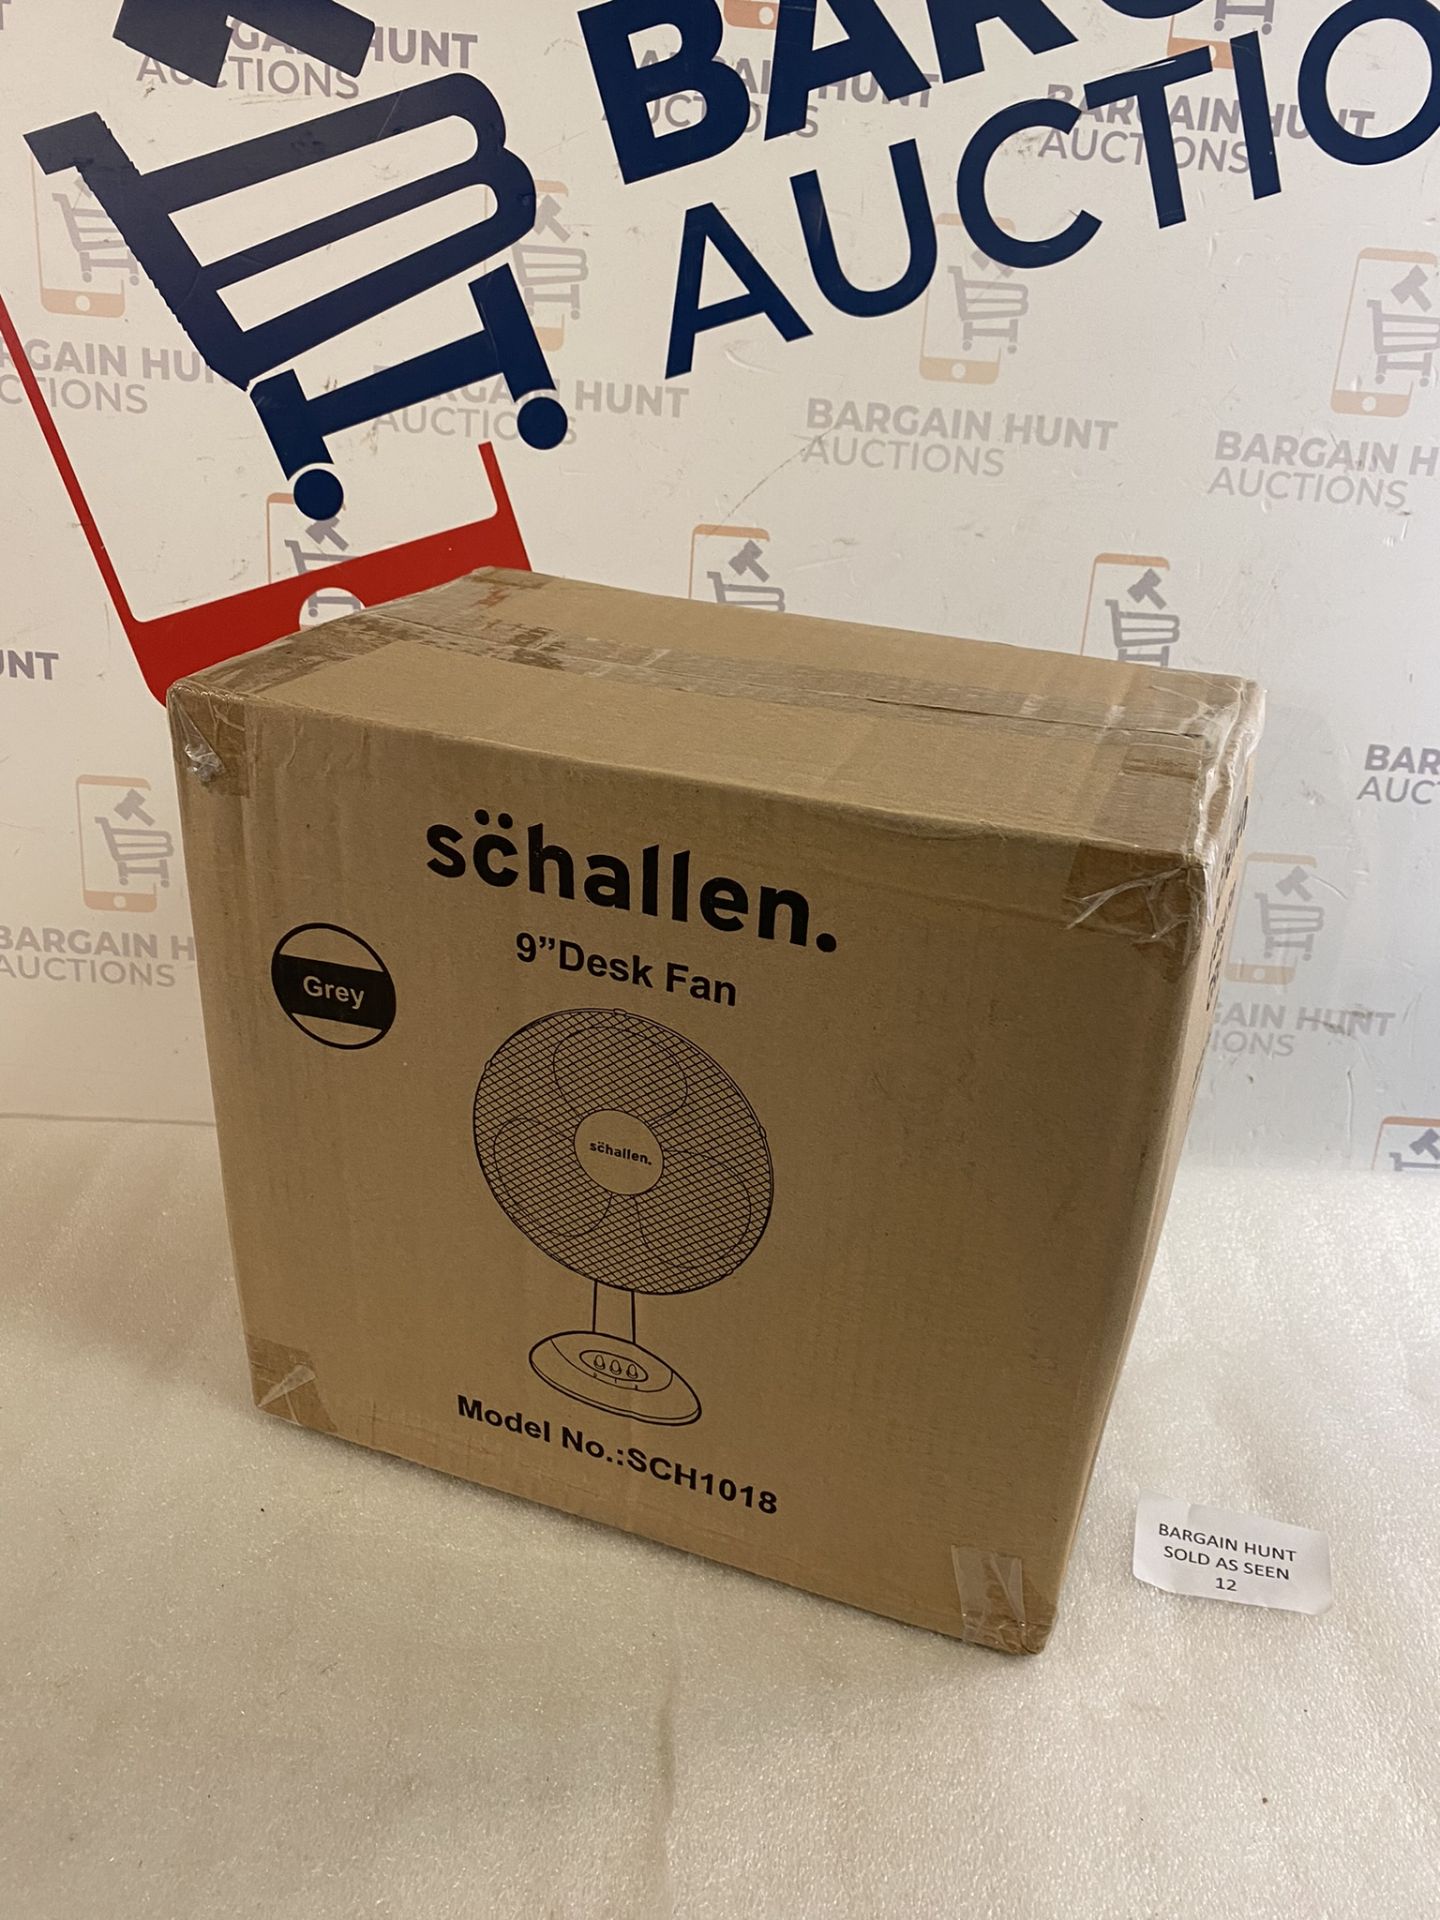 Schallen 9" Portable Oscillating Desk Fan - Image 2 of 2